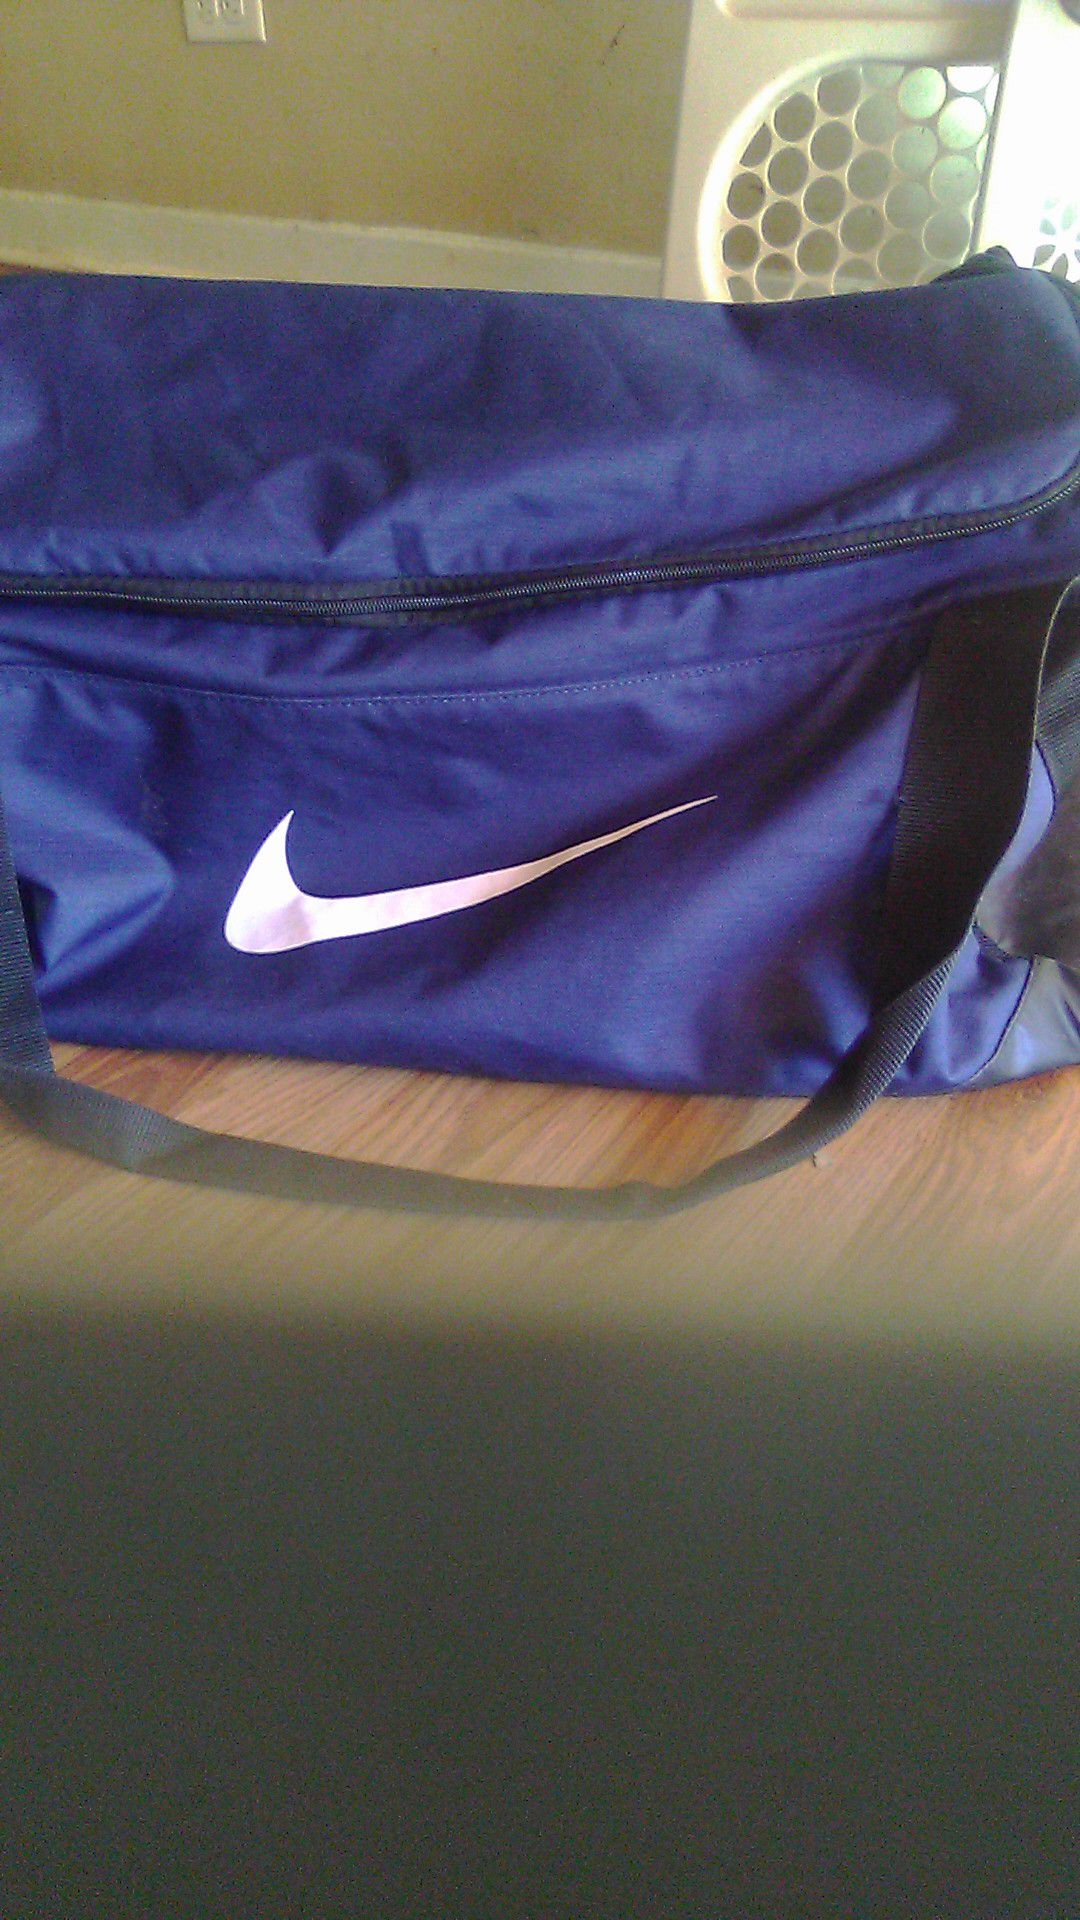 Nike Duffle bag